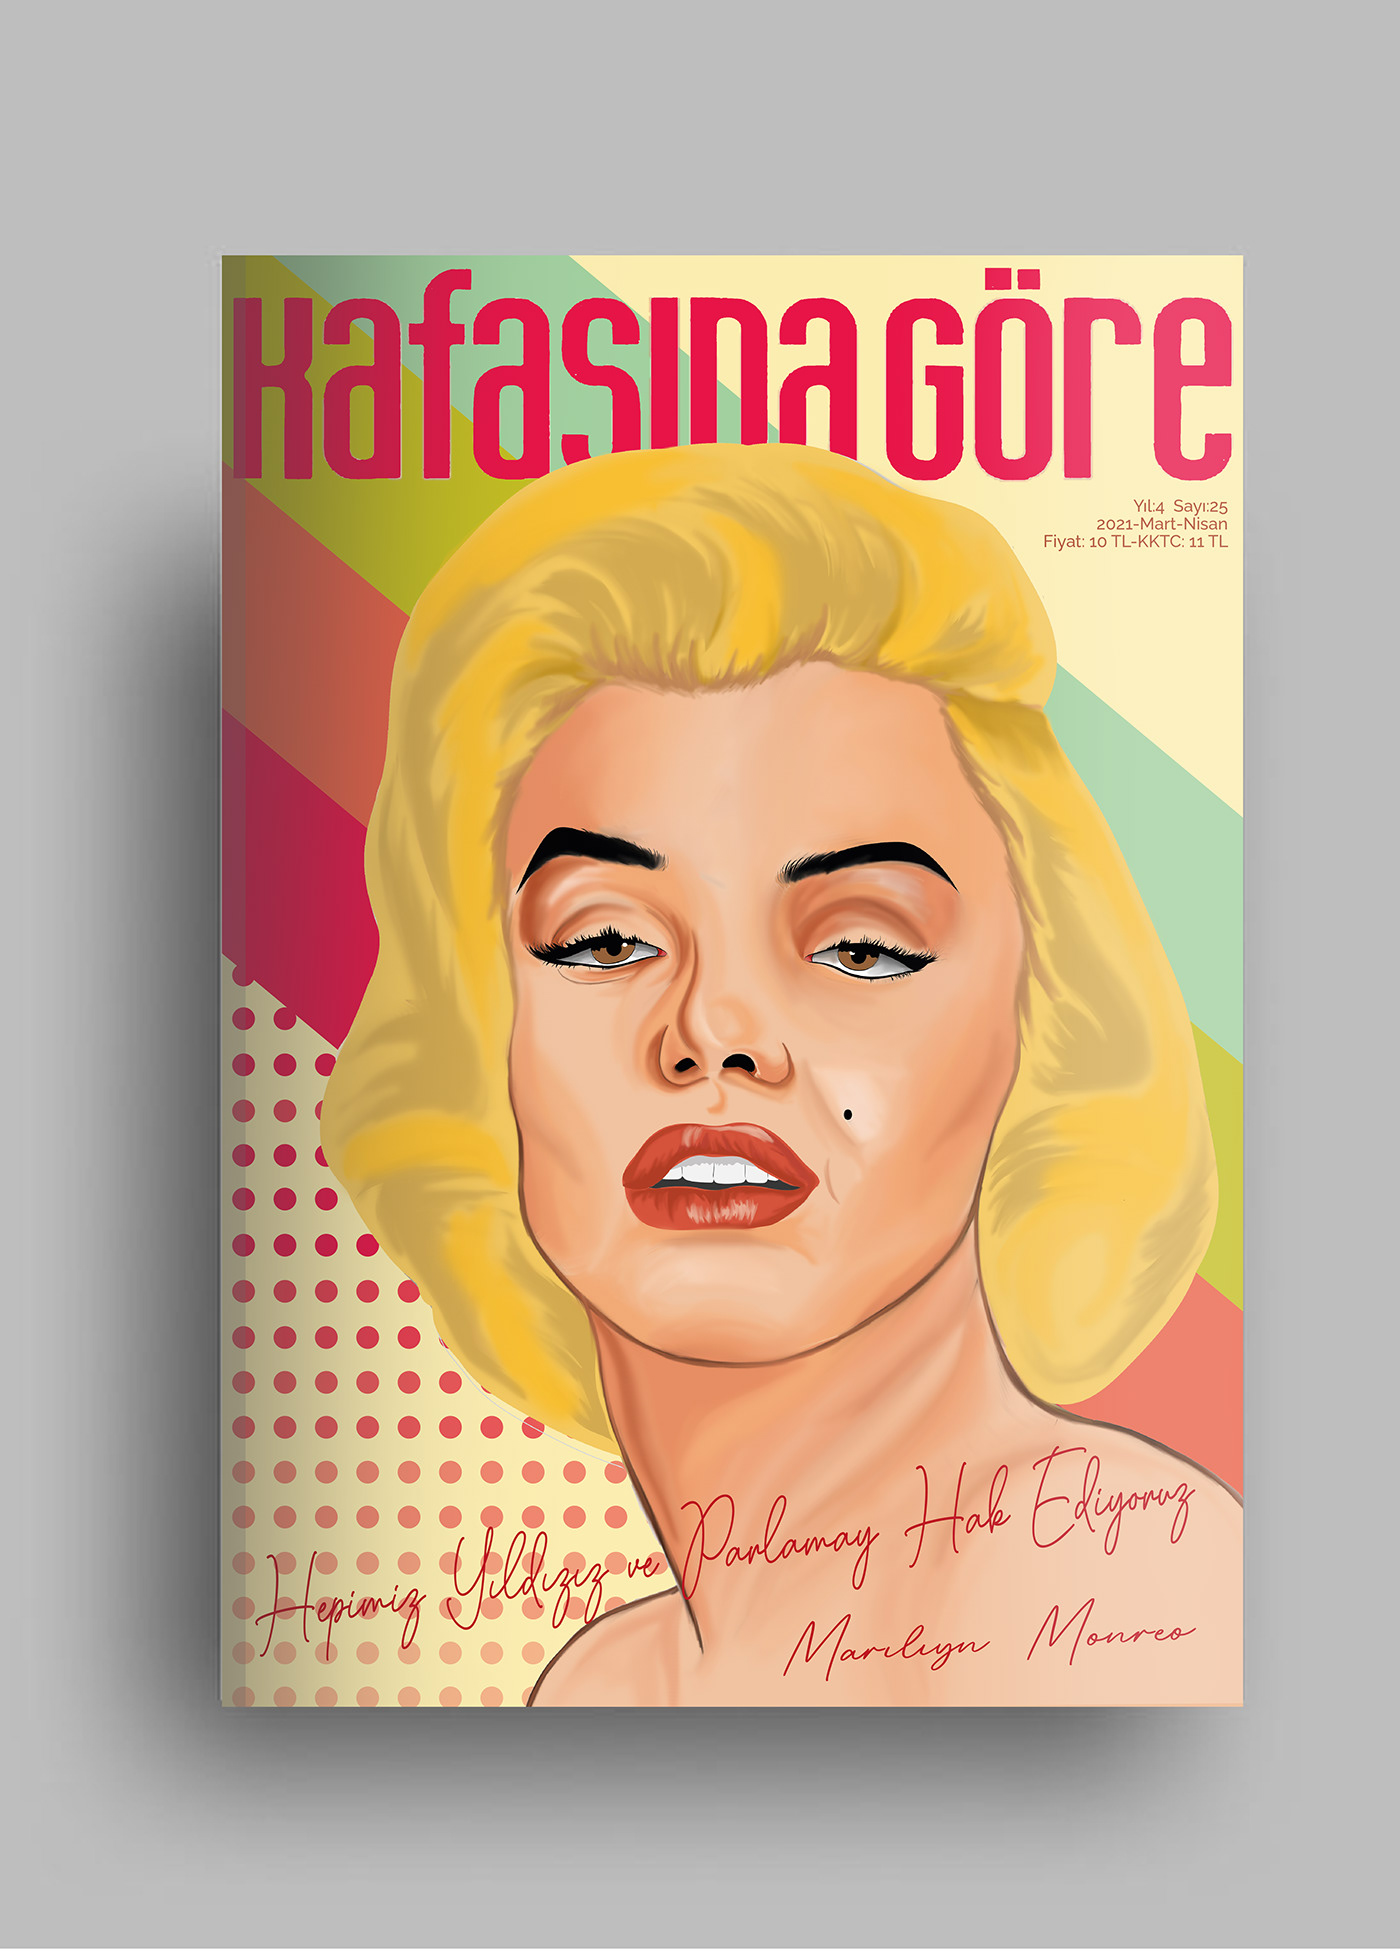 design Digital Art  Magazine design poster